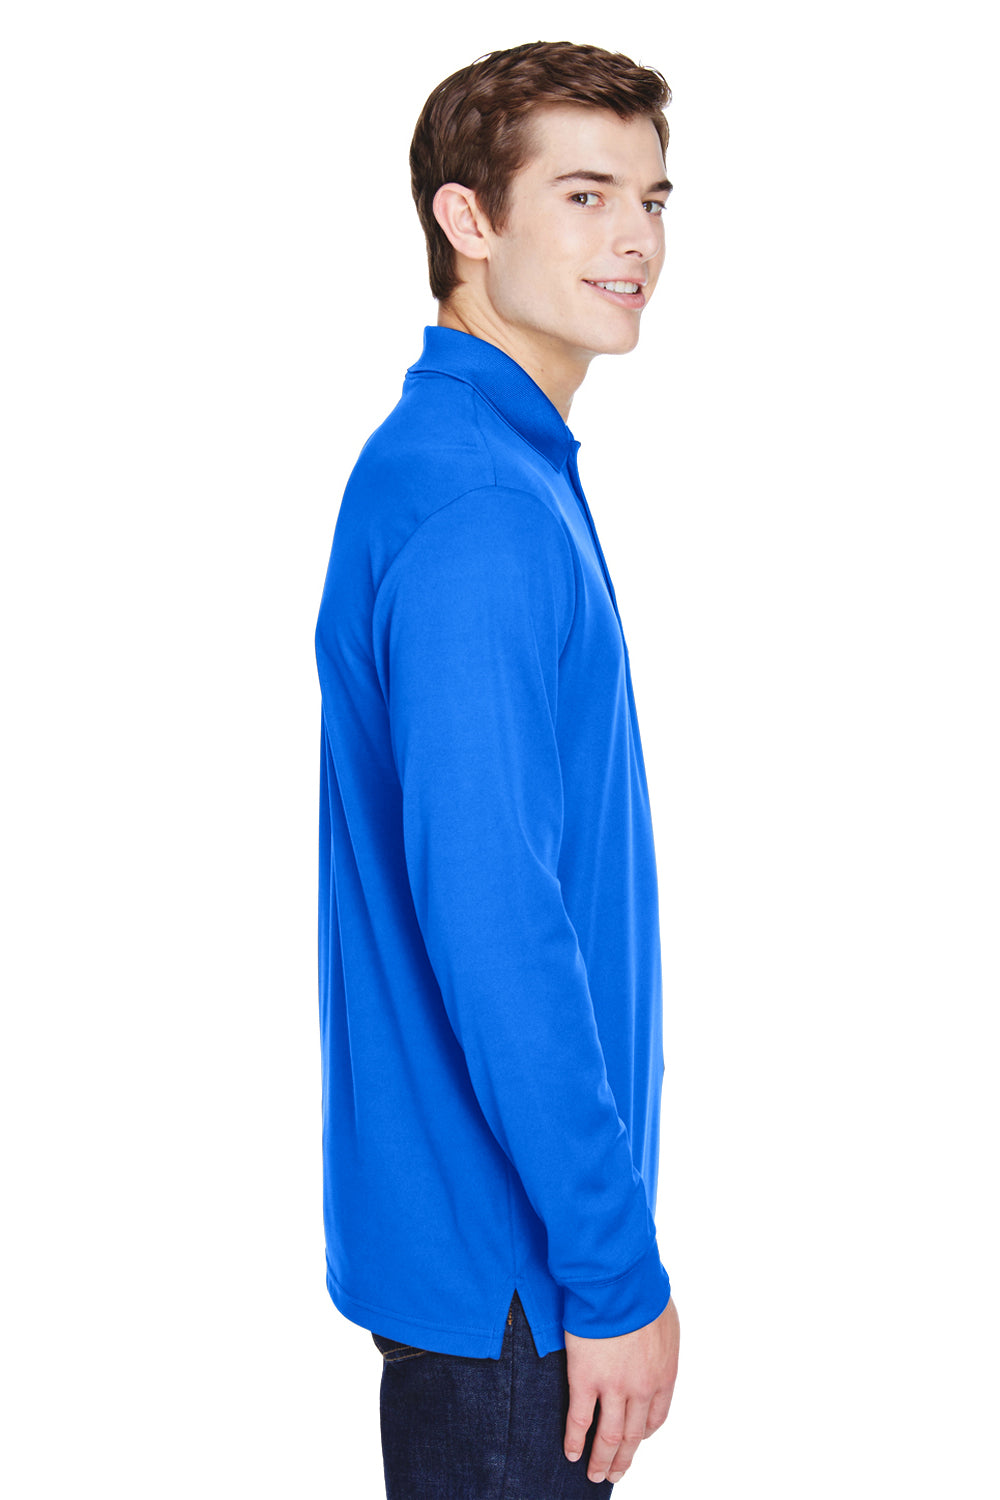 Core 365 88192P Mens Pinnacle Performance Moisture Wicking Long Sleeve Polo Shirt w/ Pocket Royal Blue Side